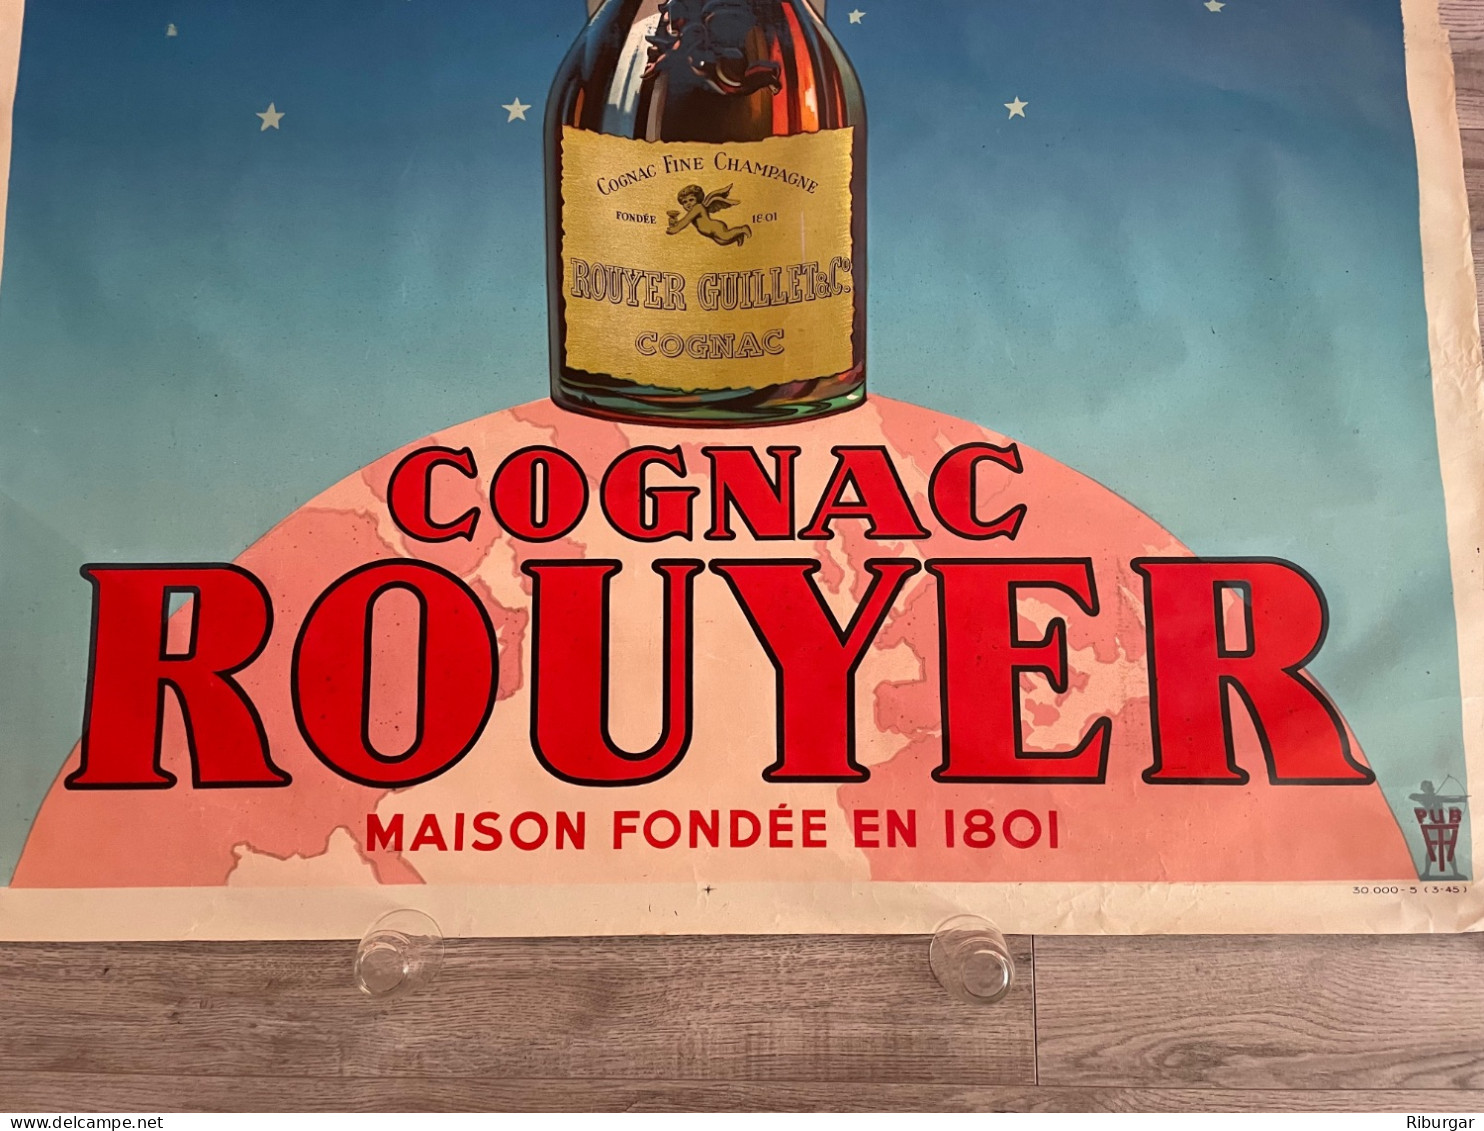 Poster Affiche Cognac Rouyer - Jugendstil / Art Déco